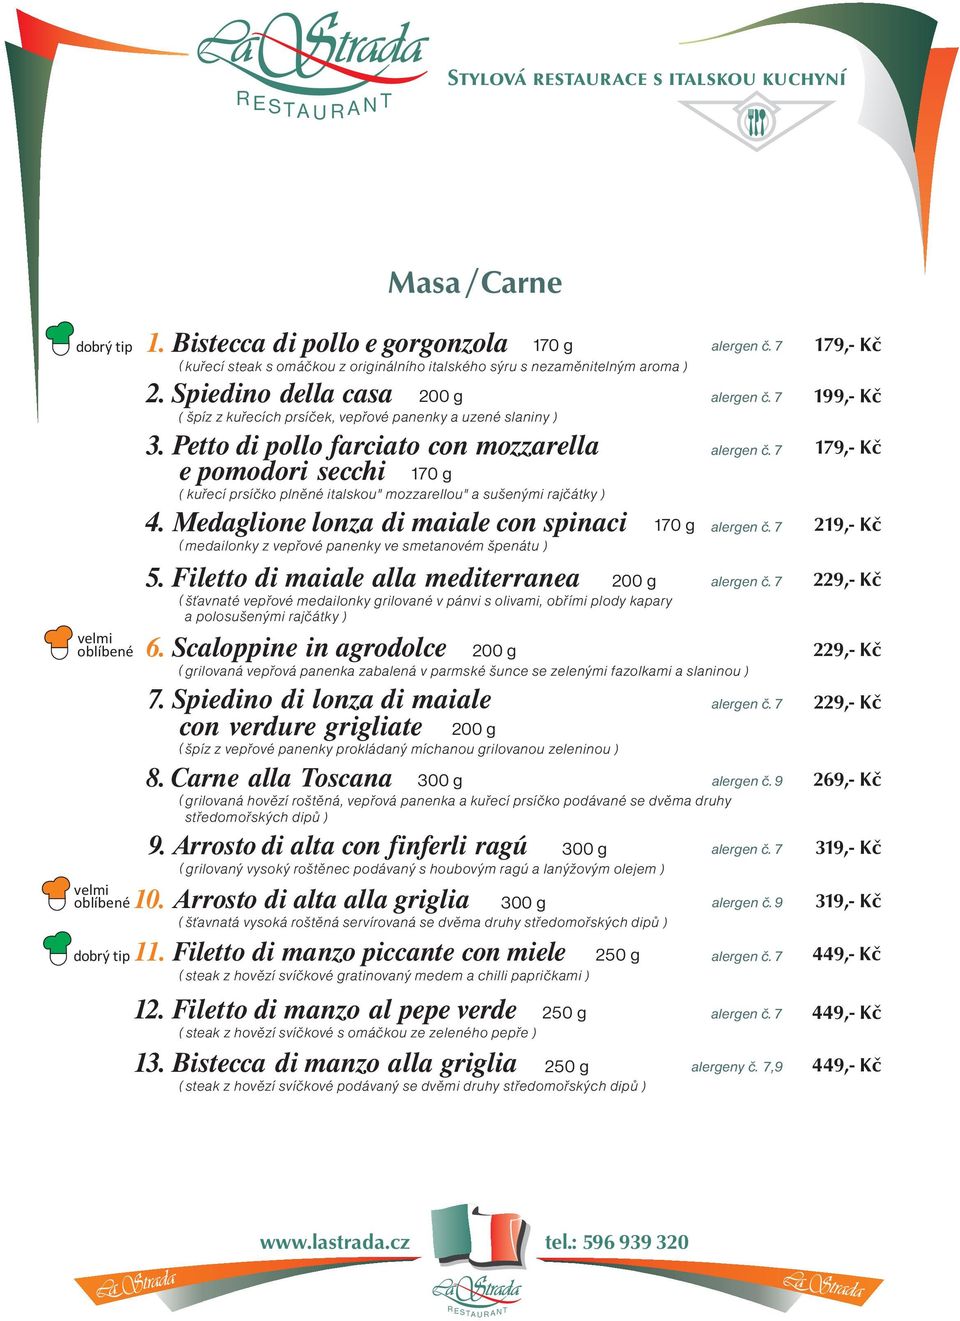 Petto di pollo farciato con mozzarella e pomodori secchi 170 g ( kuøecí prsíèko plnìné italskou" mozzarellou" a sušenými rajèátky ) 4.